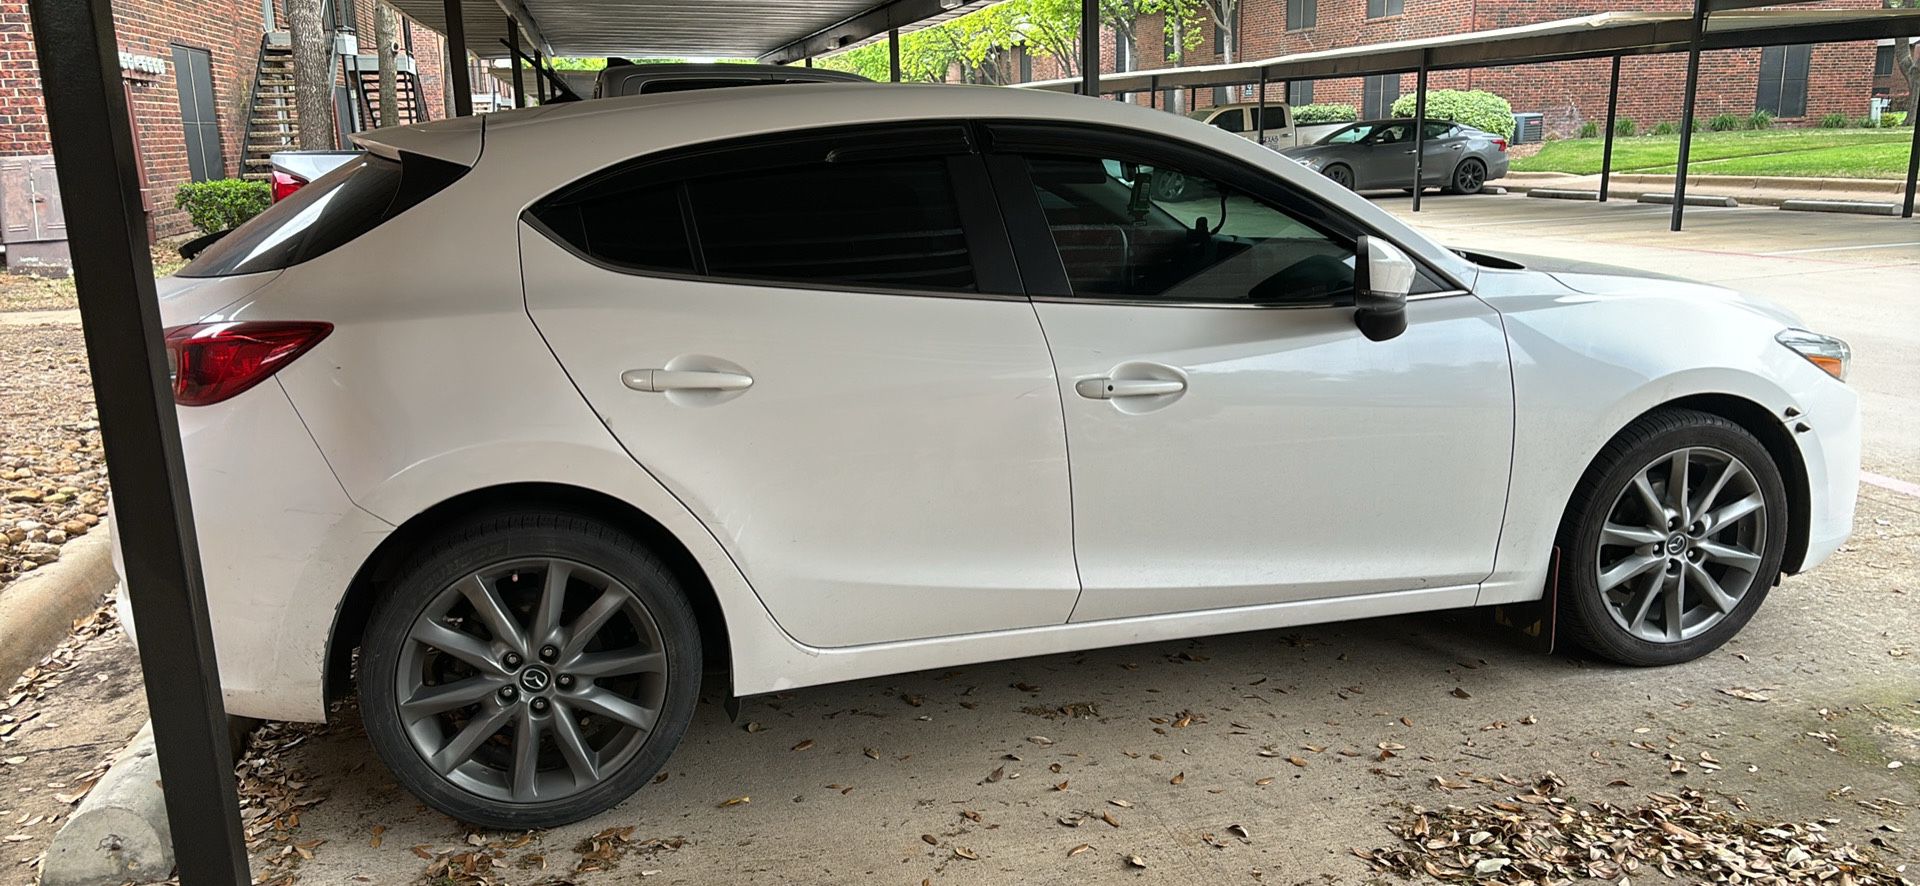 Mazda 3 Hatchback 2018 Clean Title 